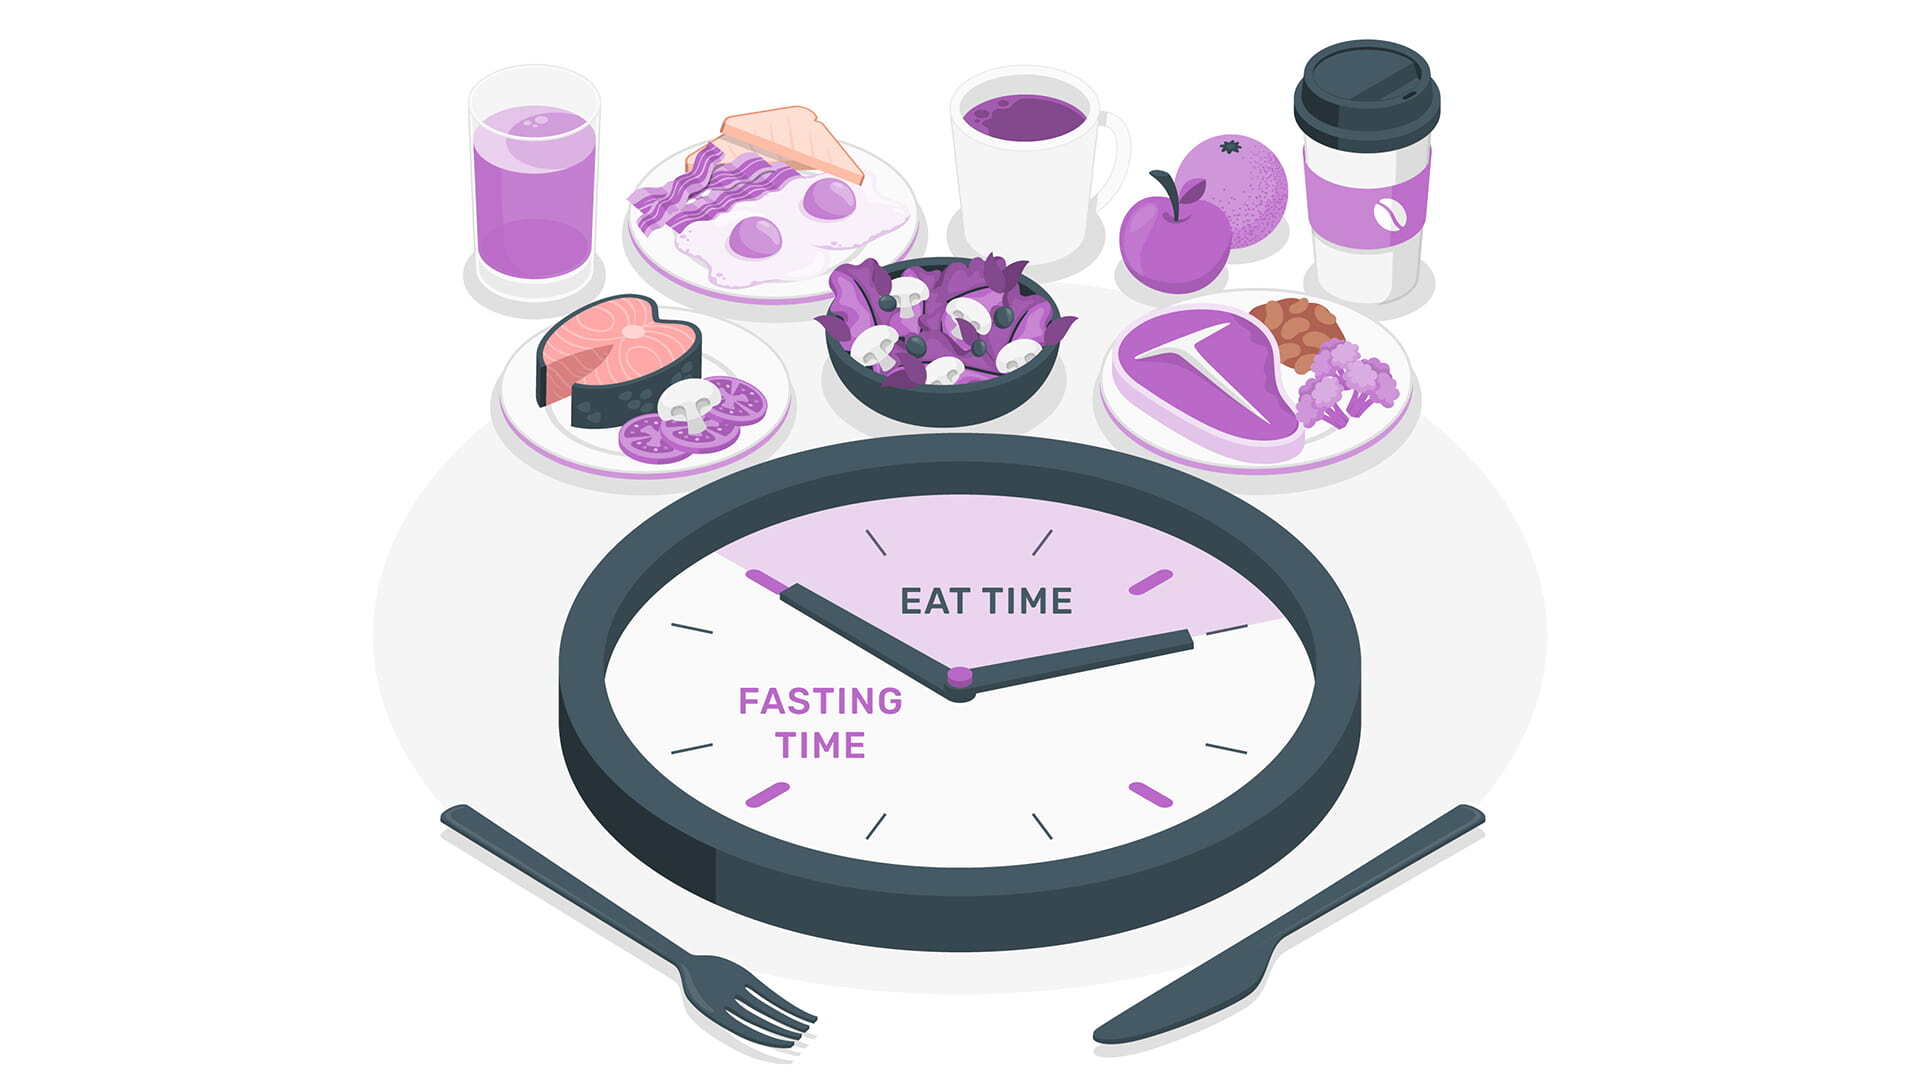 Fasting intermittent